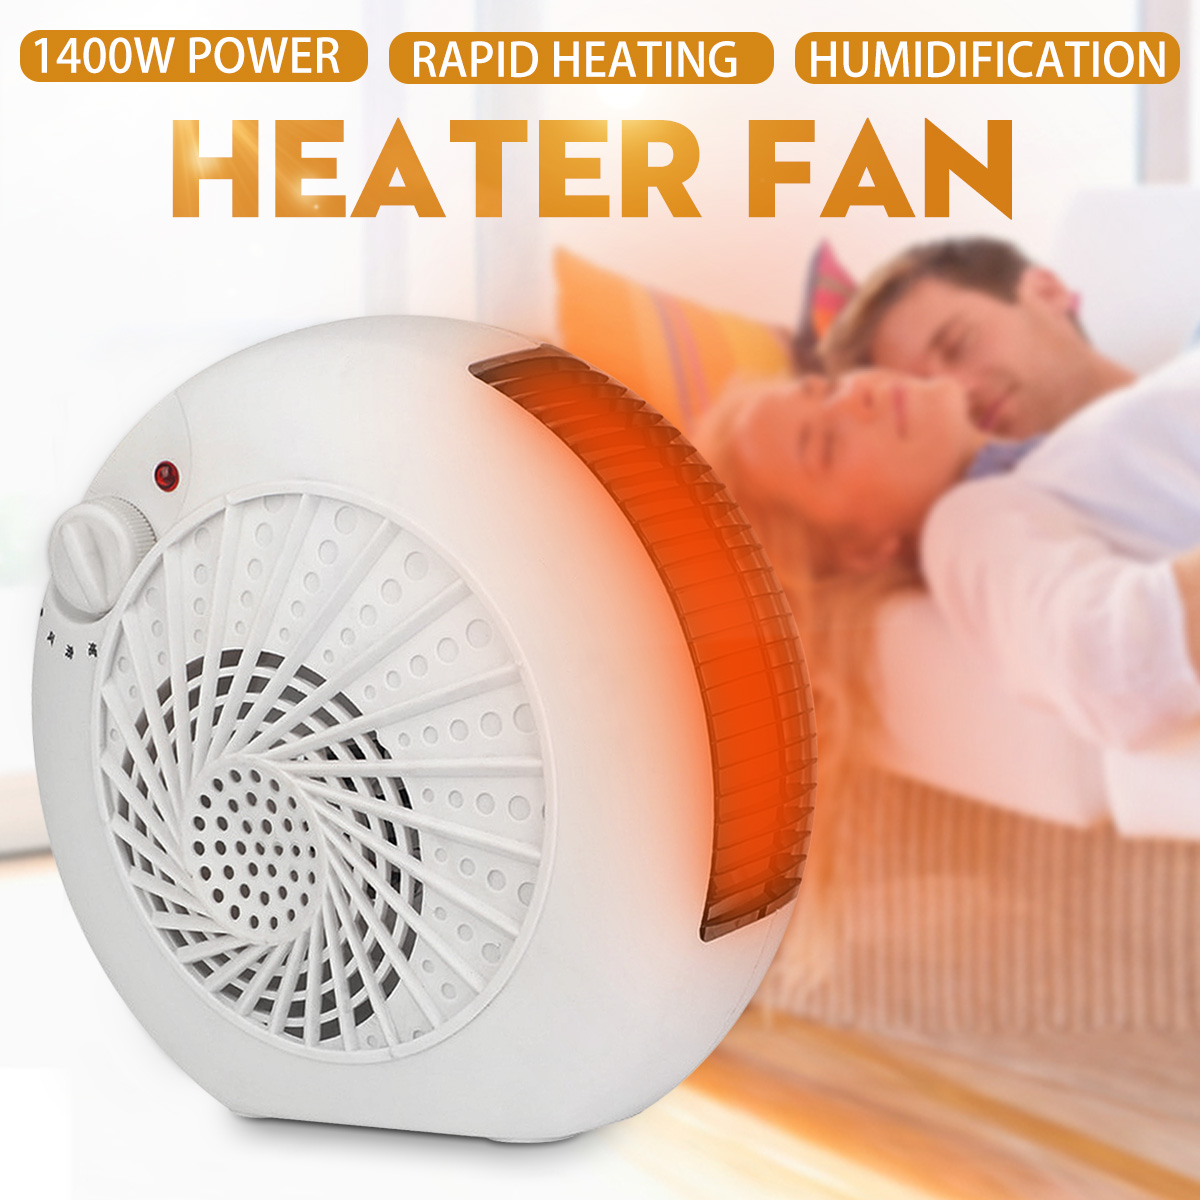 1400W-Portable-Electric-Heater-Fan-Air-Warmer-3-Speeds-Desk-Household-Office-Use-1575804-2